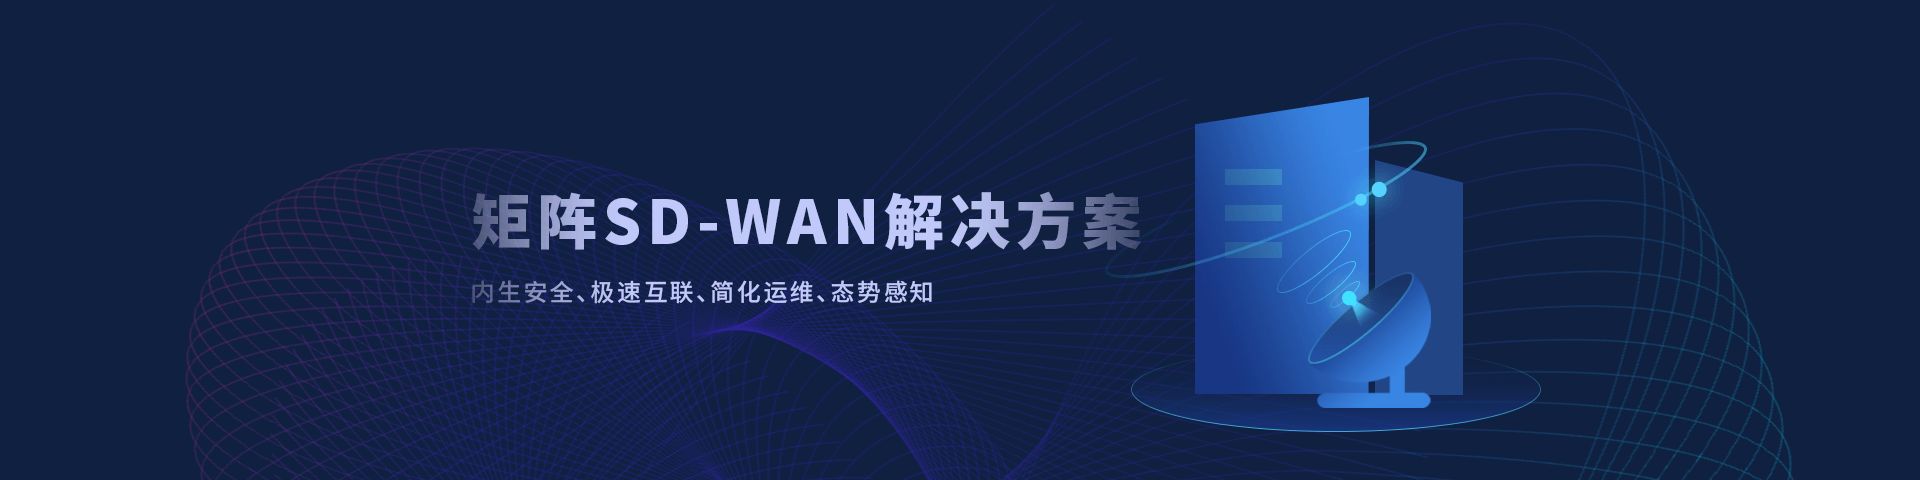 SD-WAN解决方案页面的banner